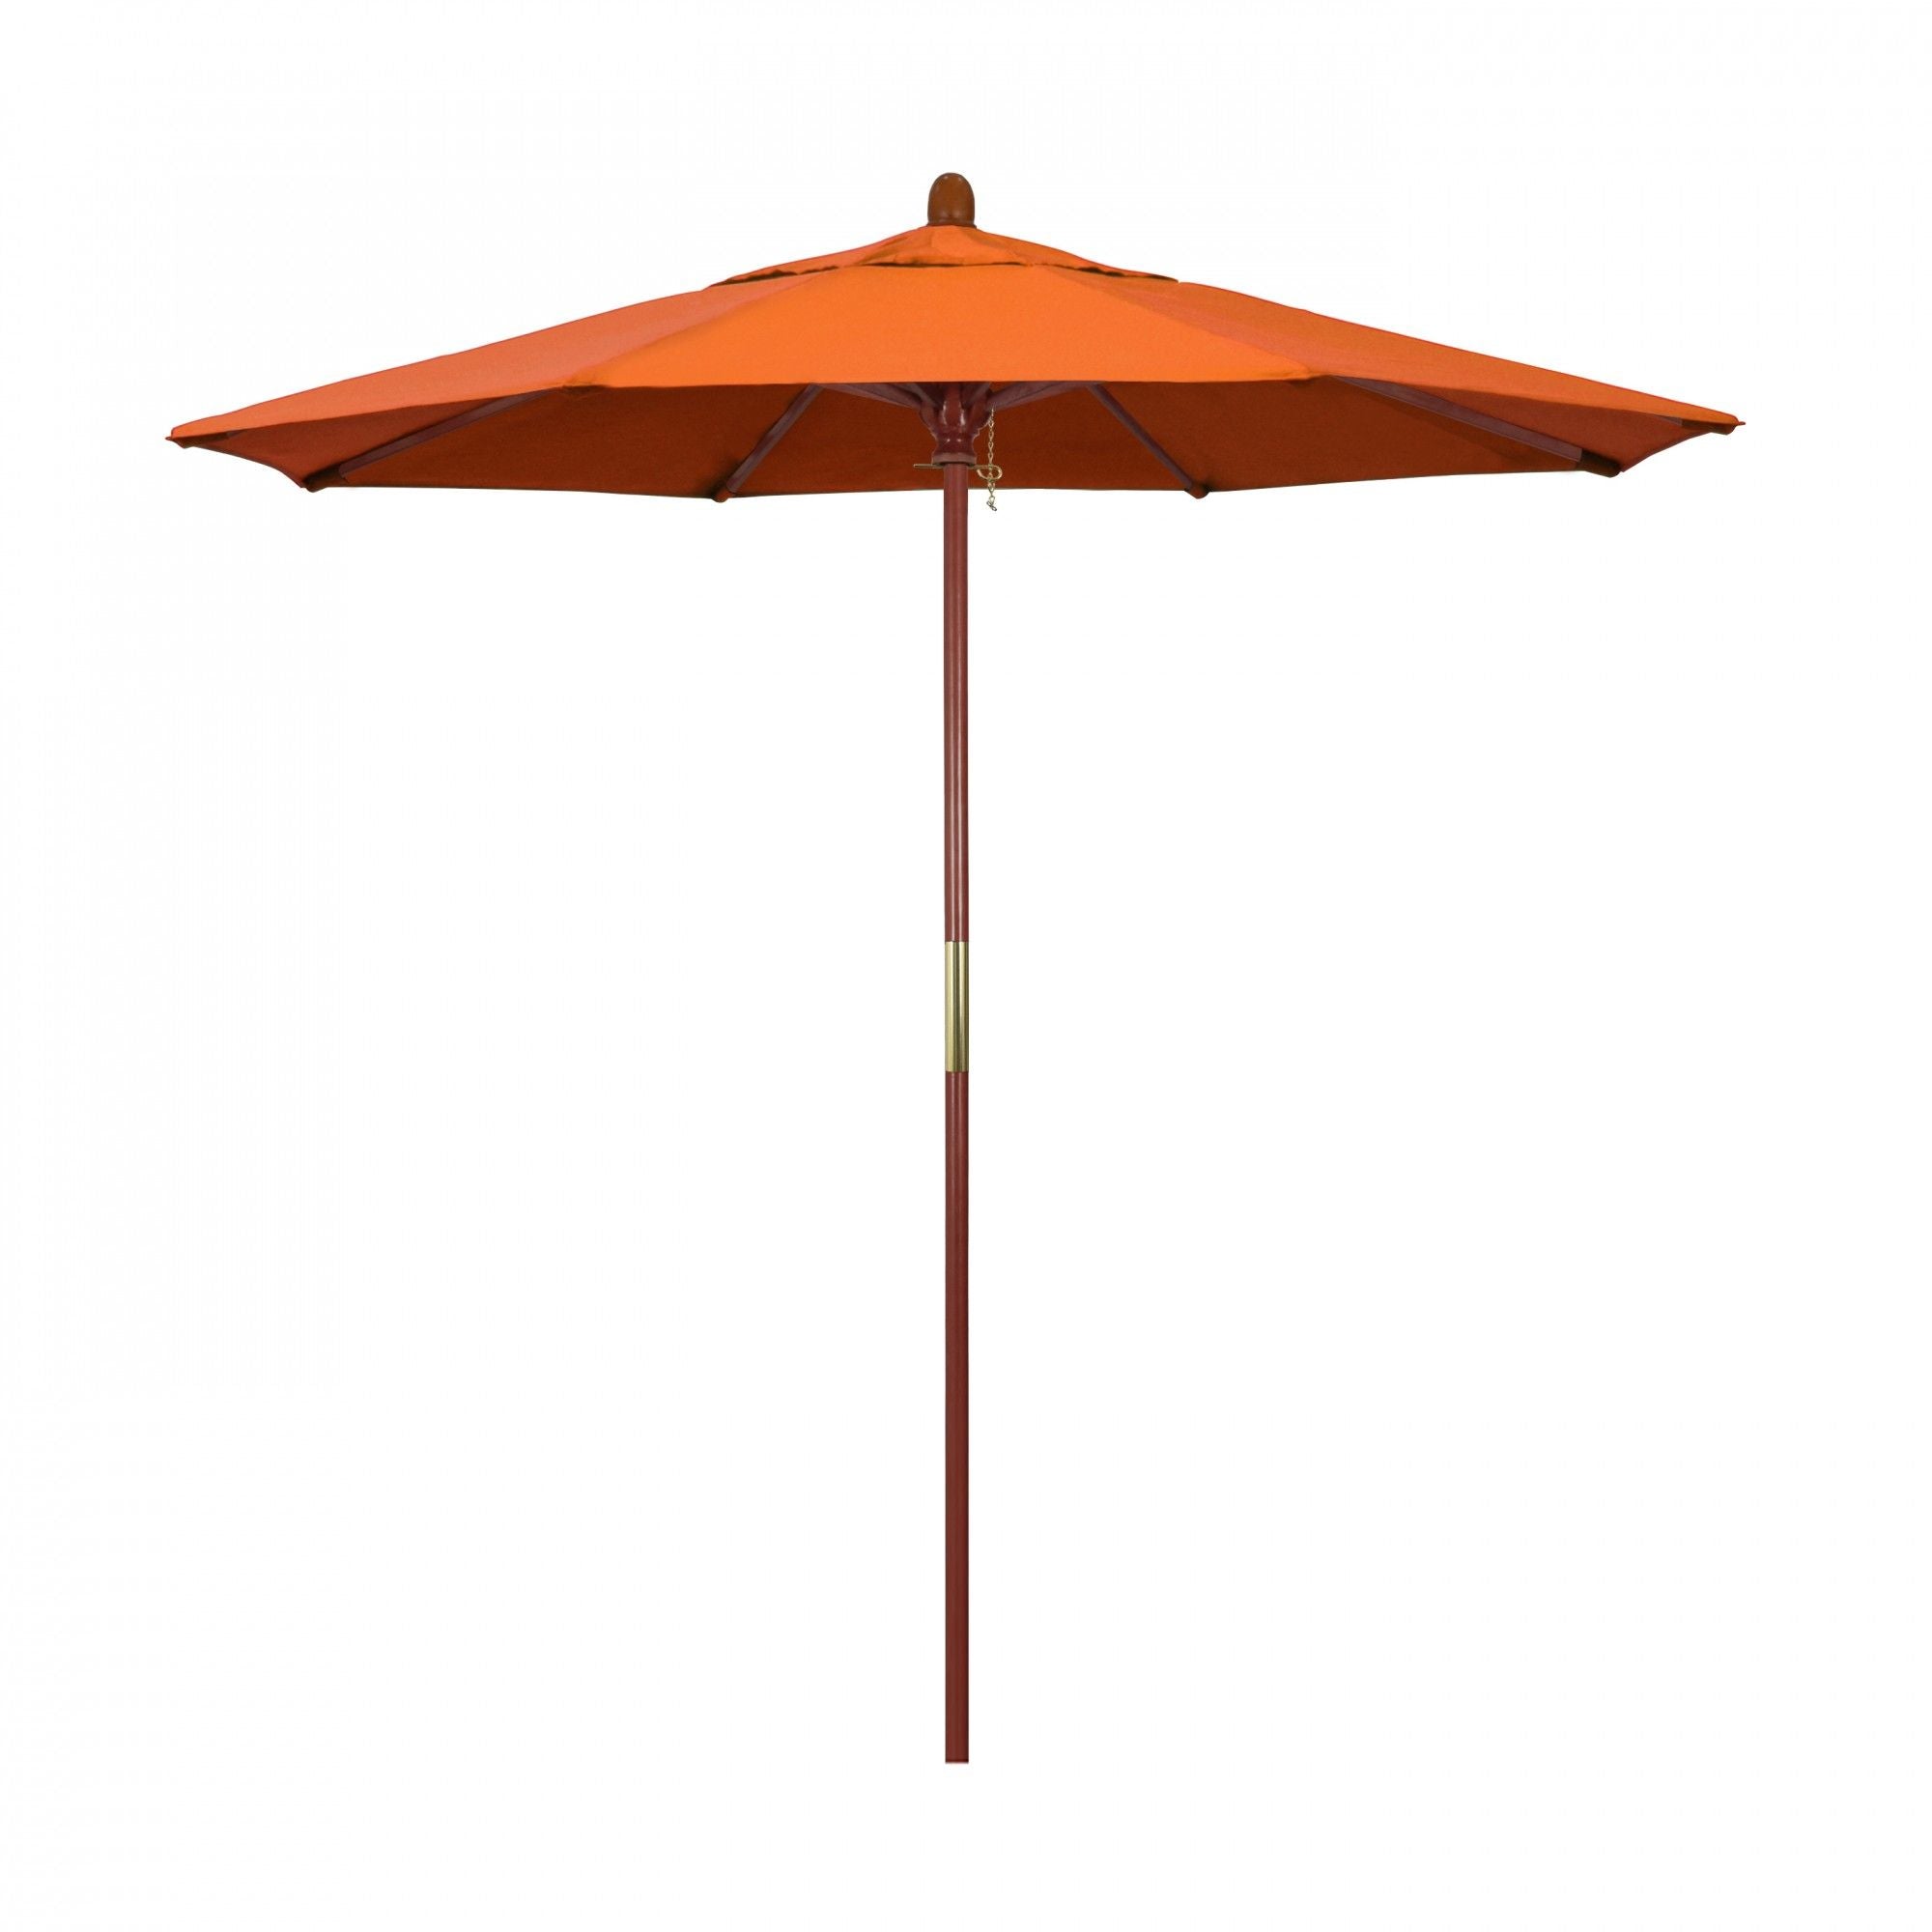 California Umbrella Grove Series Patio Umbrella, 7 1/2 ft. Octagonal, Color Tuscan -  $165